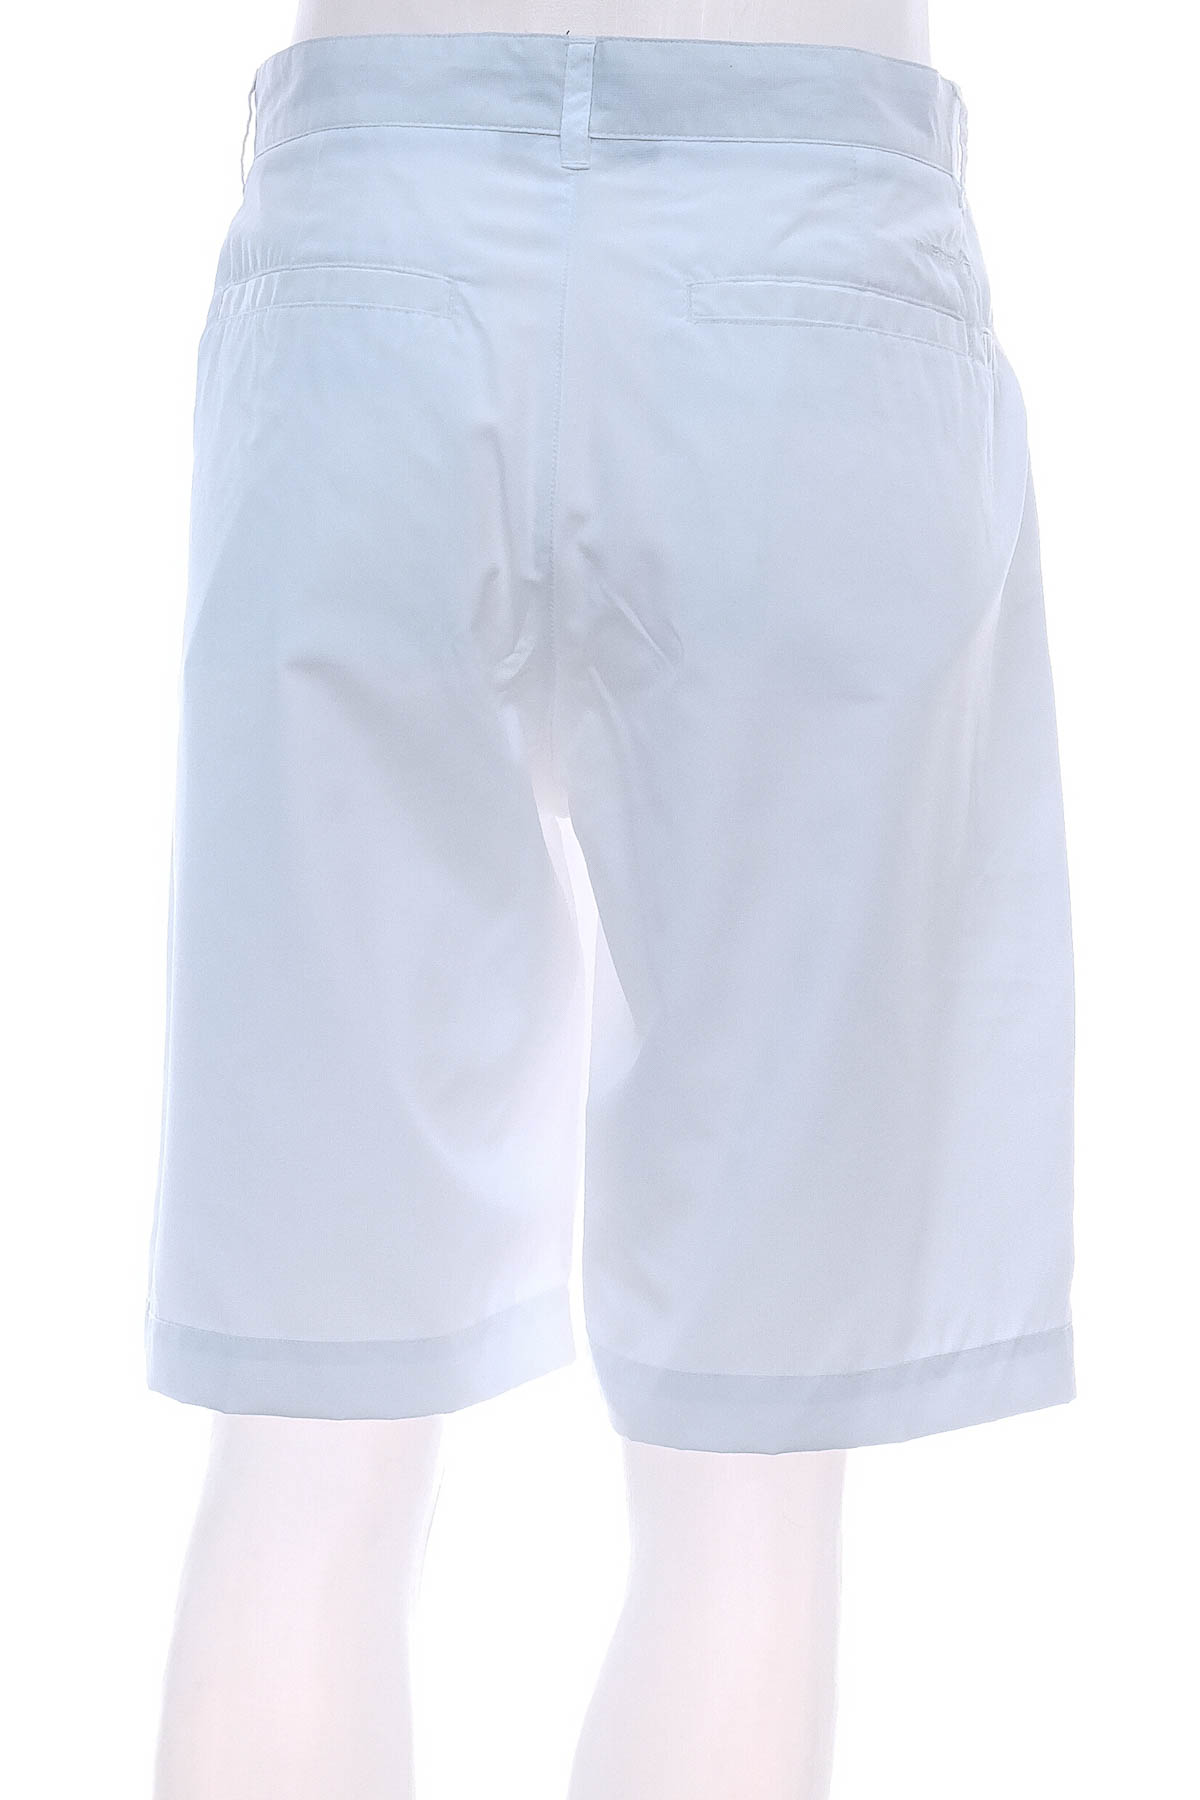 Men's shorts - Oxylane - 1